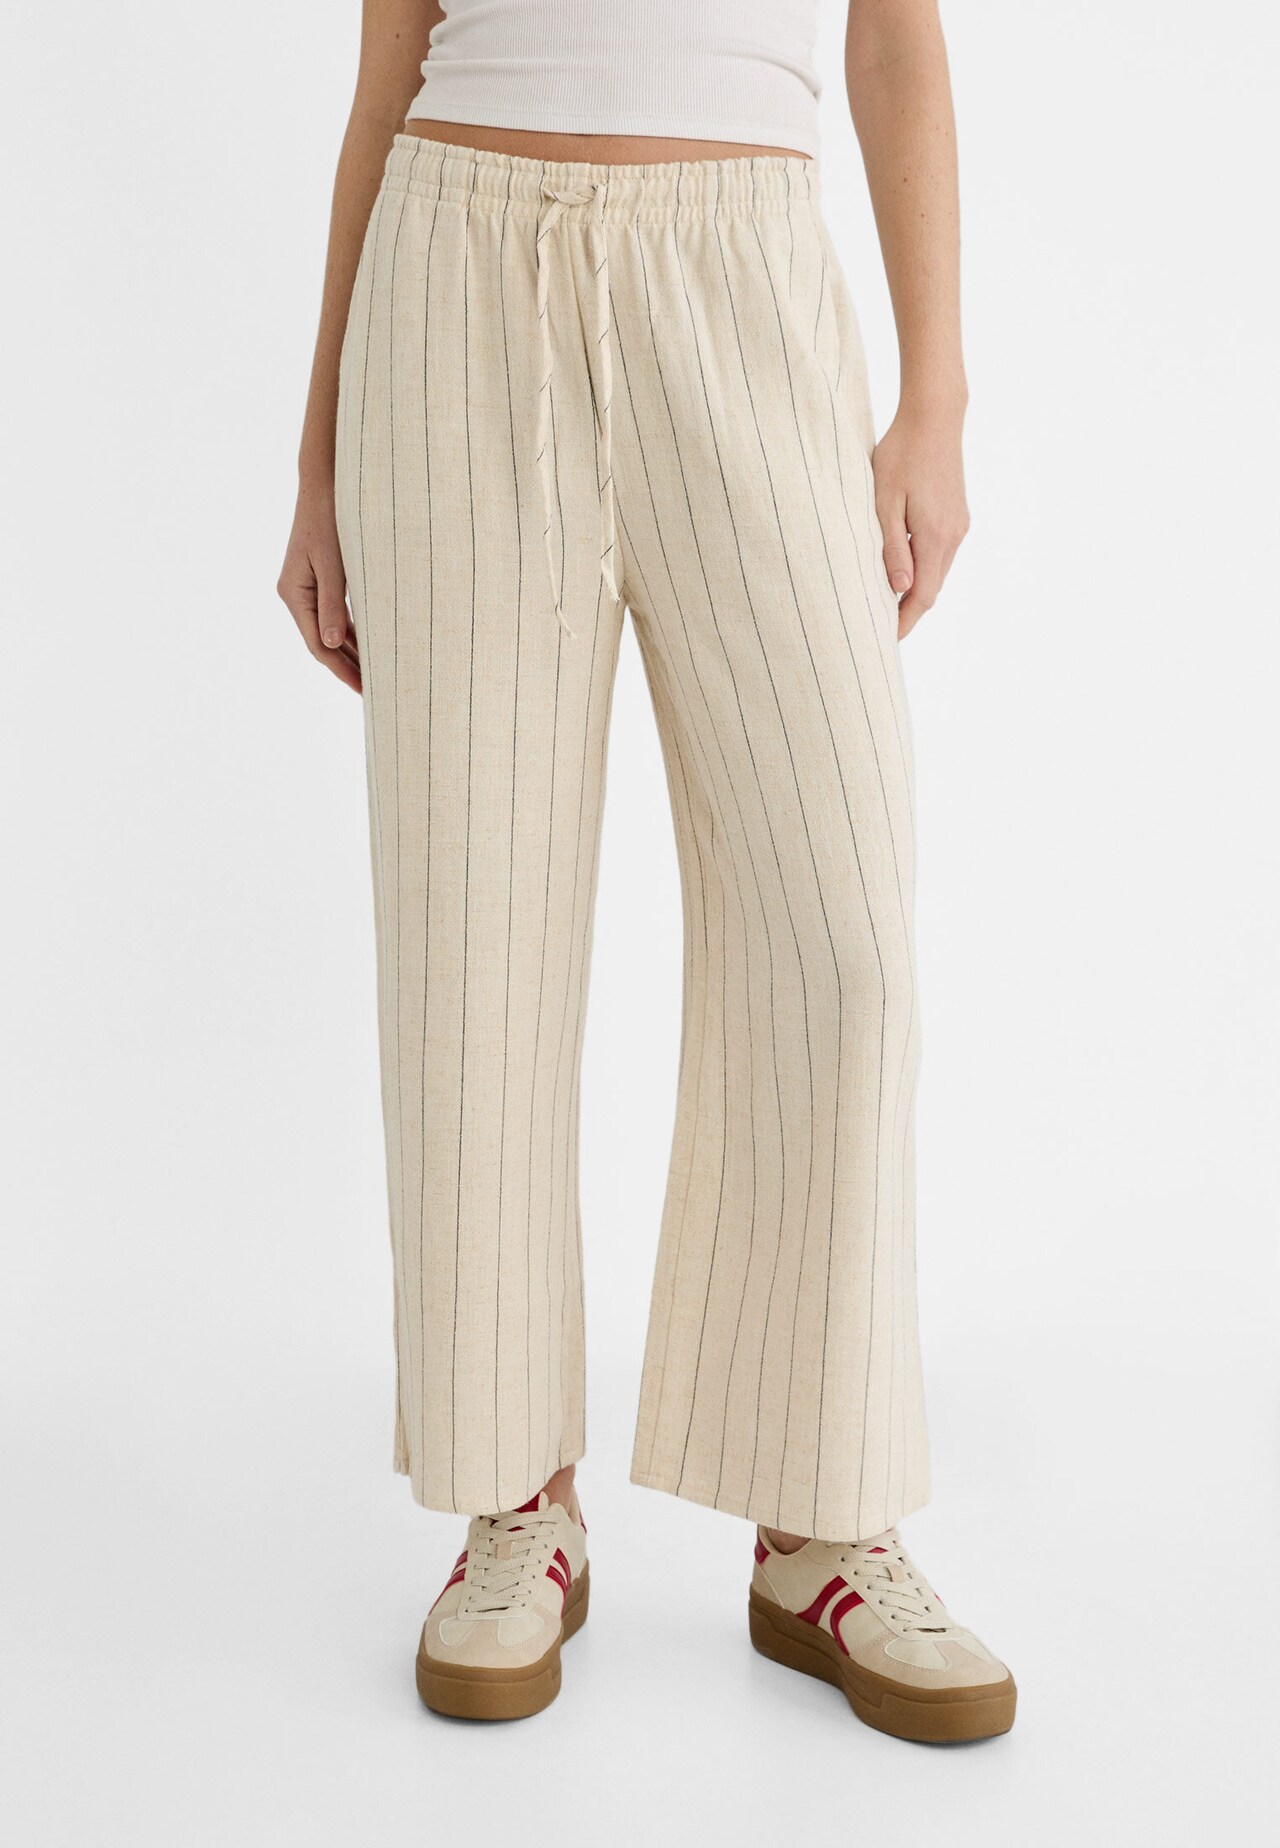 Cairo Striped Linen Pants